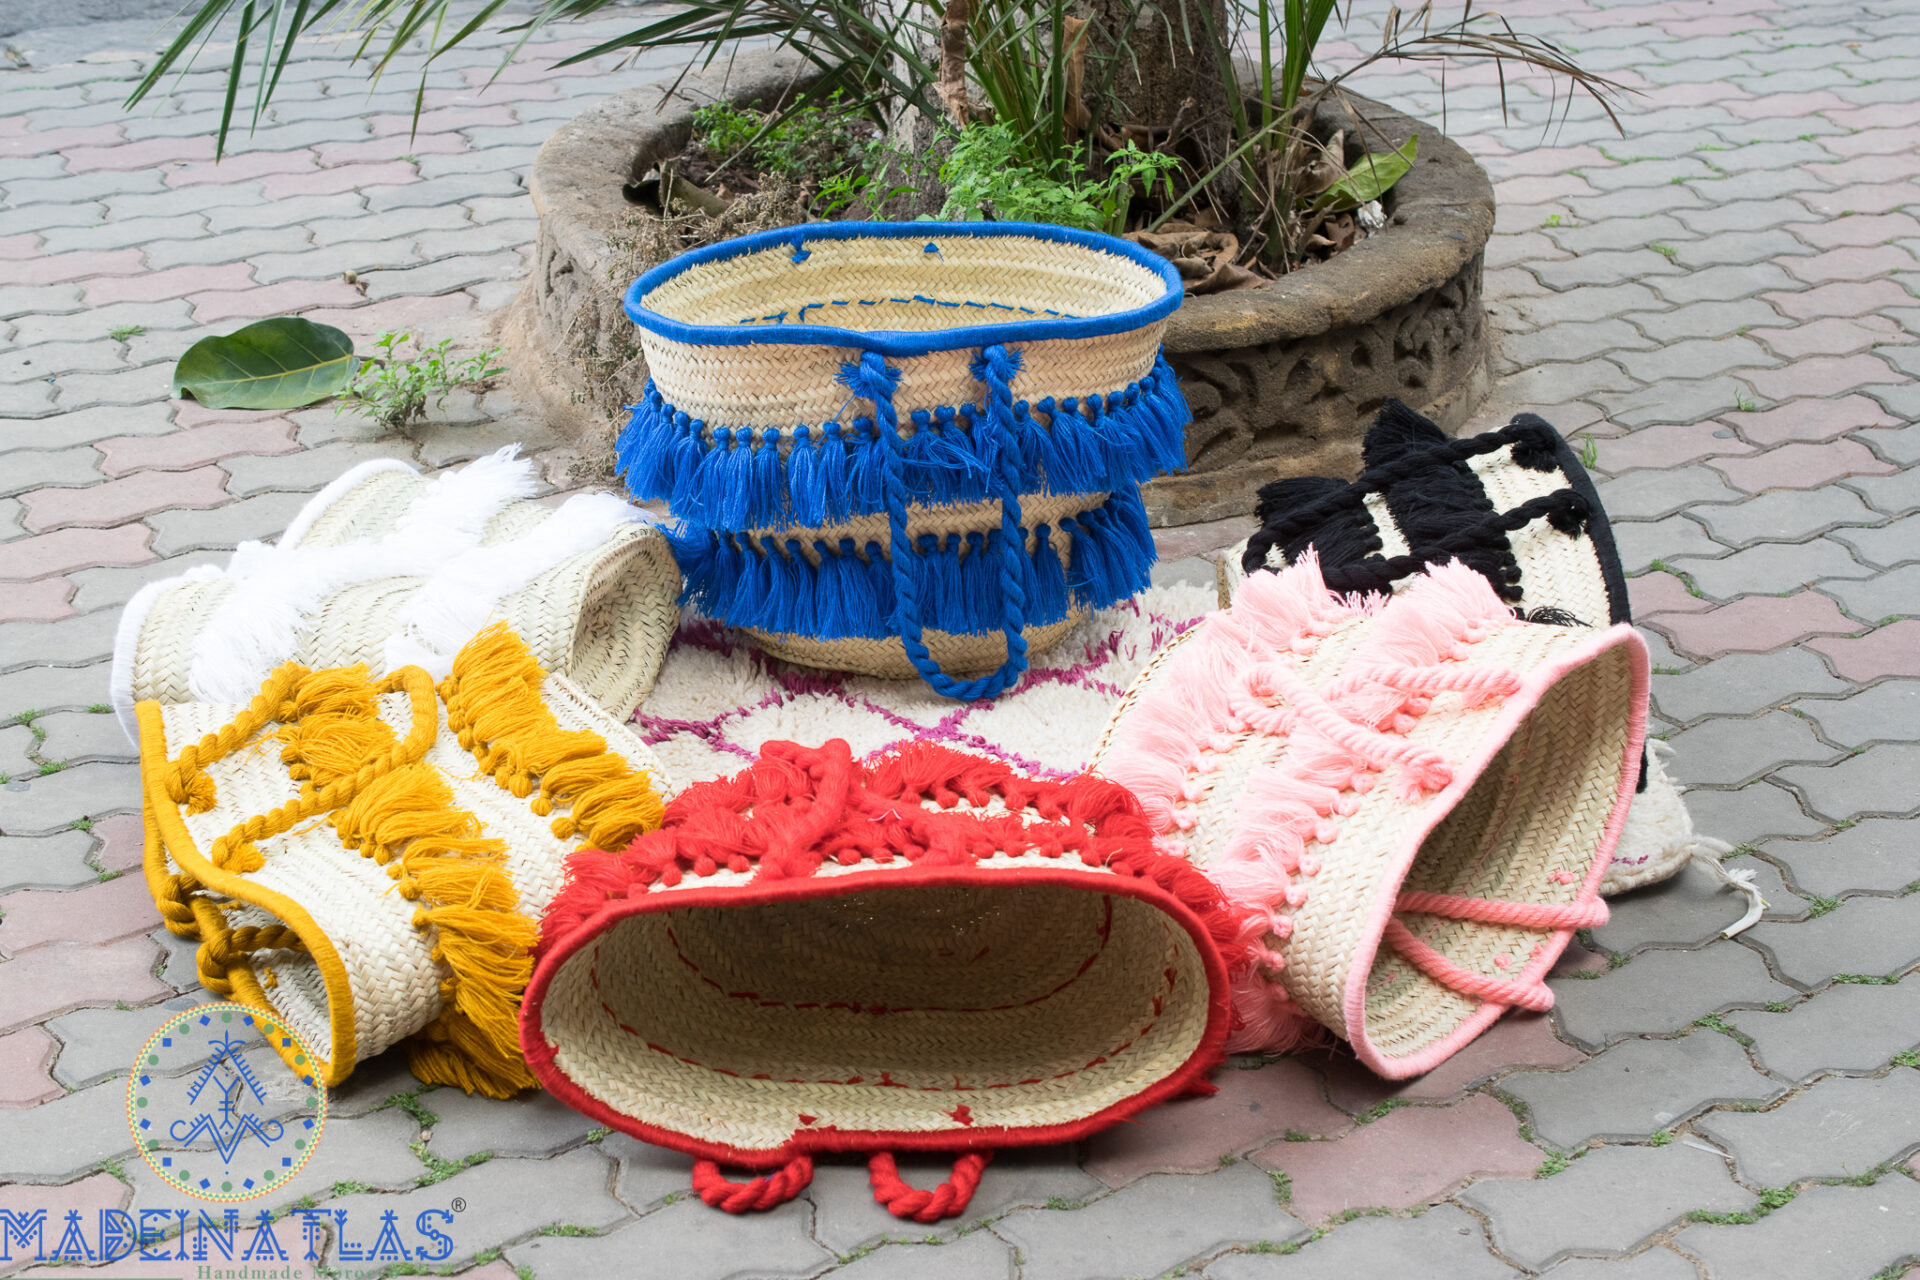 baby straw basket small pompom old pink : French Basket, Moroccan Basket,  straw bag, french market basket, Beach Bag, straw bag